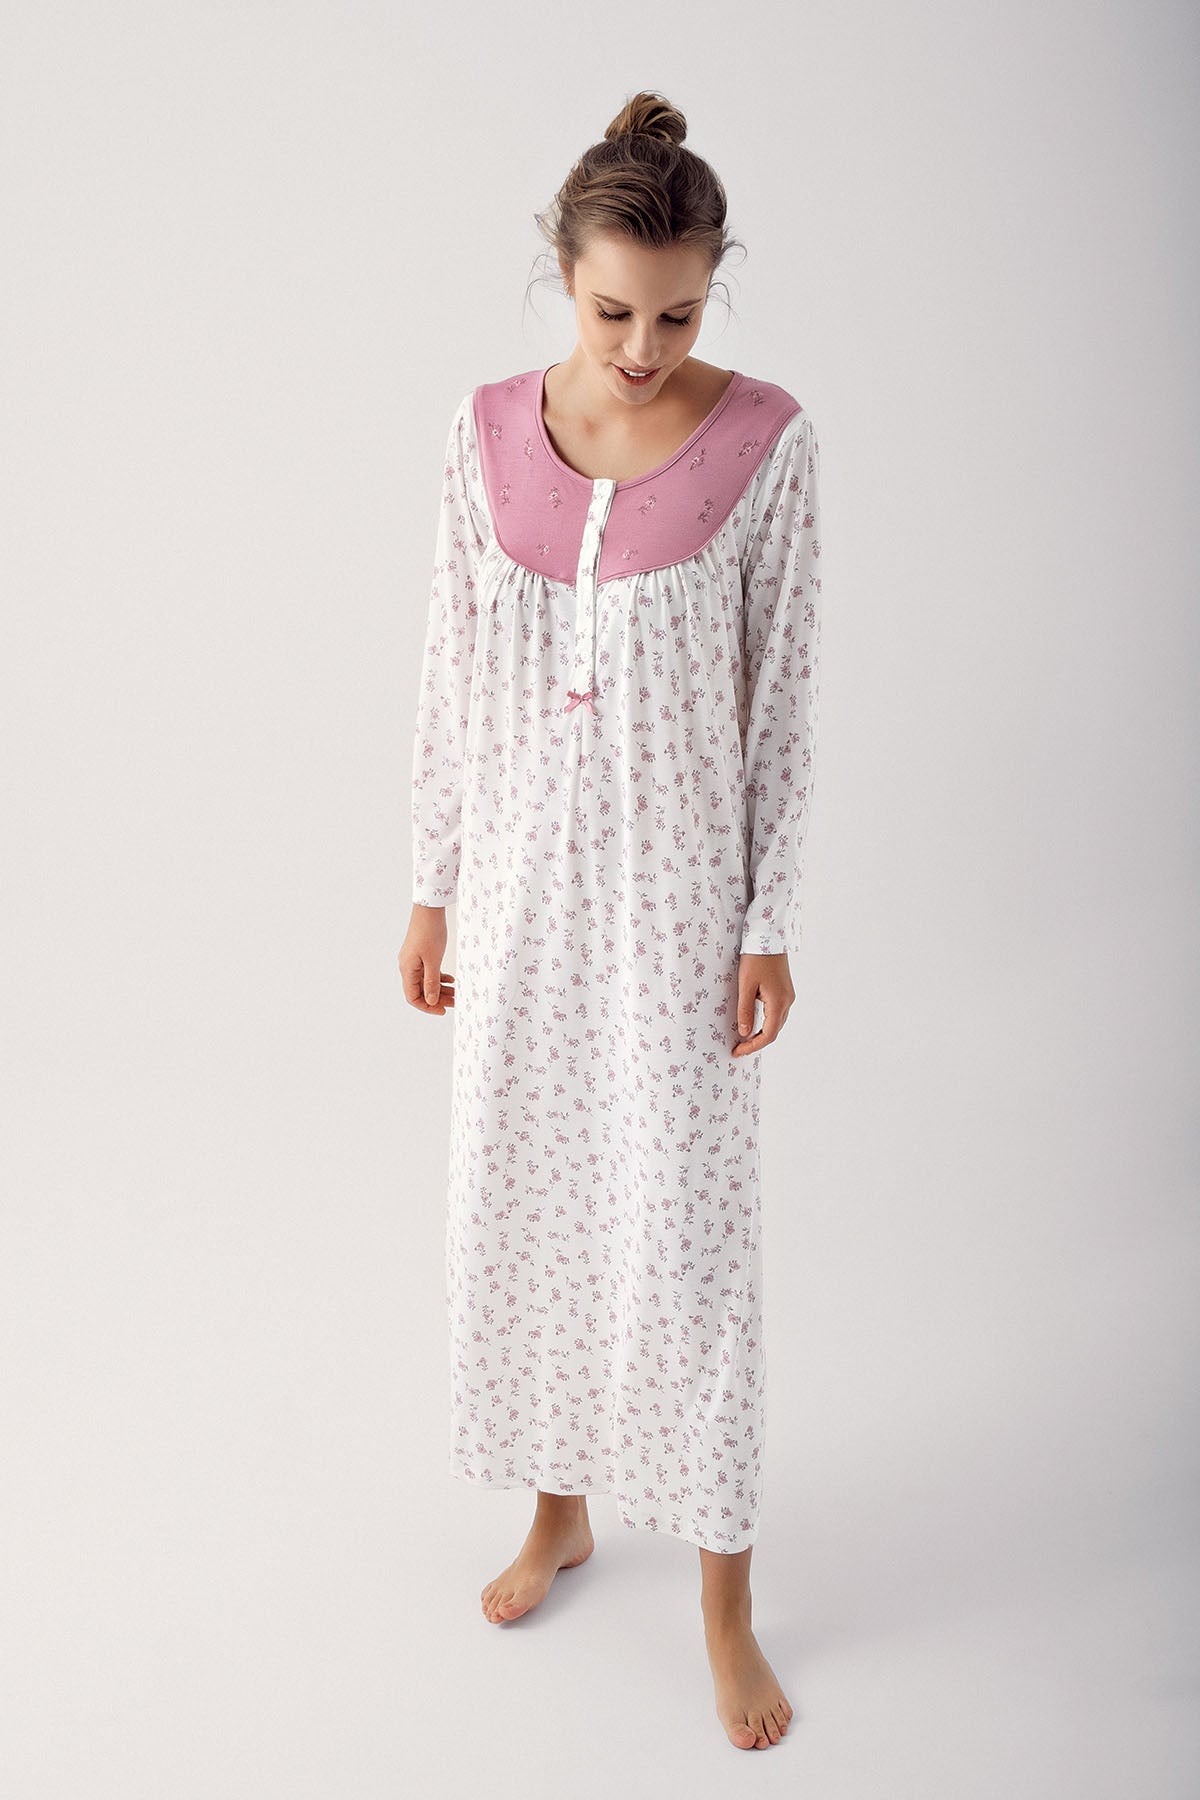 Flower Pattern Plus Size Maternity & Nursing Nightgown Dried Rose - 14111